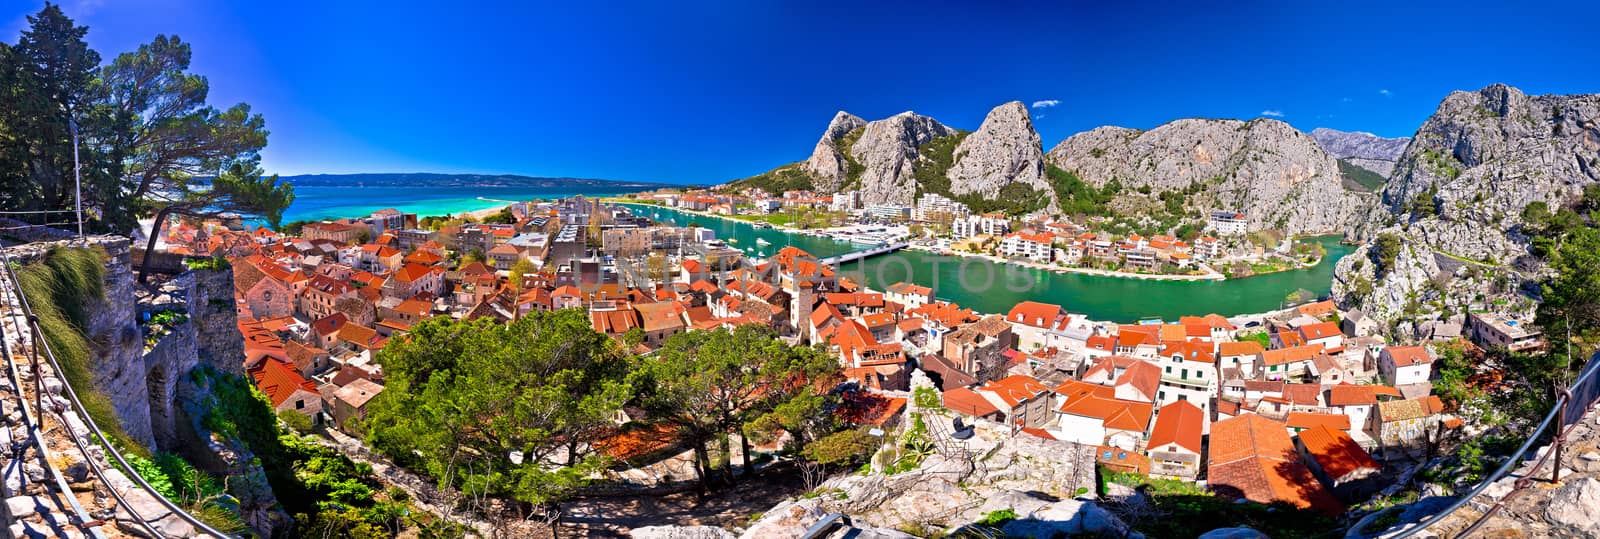 Town of Omis and Cetina river mouth panoramic view, Dalmatia region of Croatia